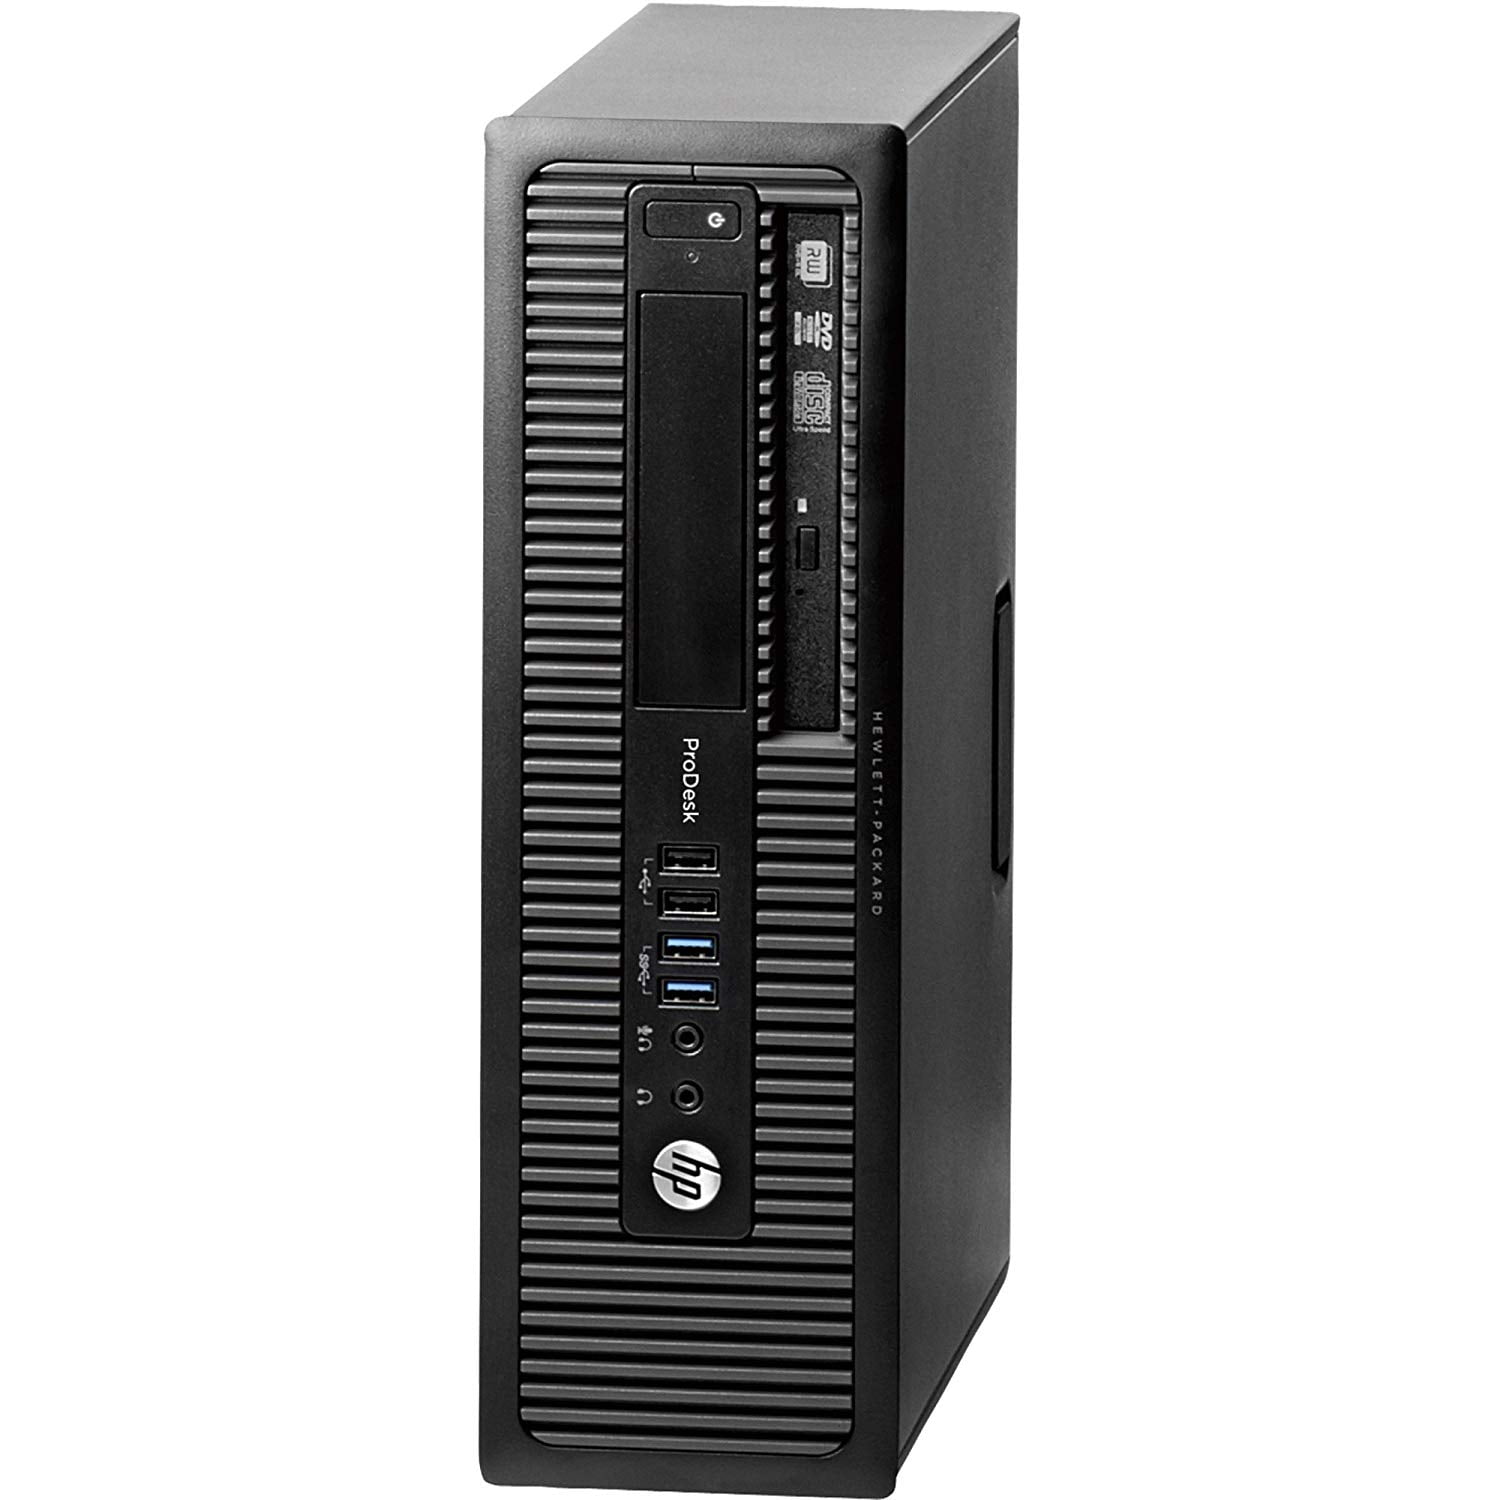 Restored HP ProDesk 600 G1 Desktop Computer with Intel Core i7-4770  Processor, 16 GB of RAM, 240 GB SSD, DVD, Wi-Fi, Windows 10 Professional  64-Bit